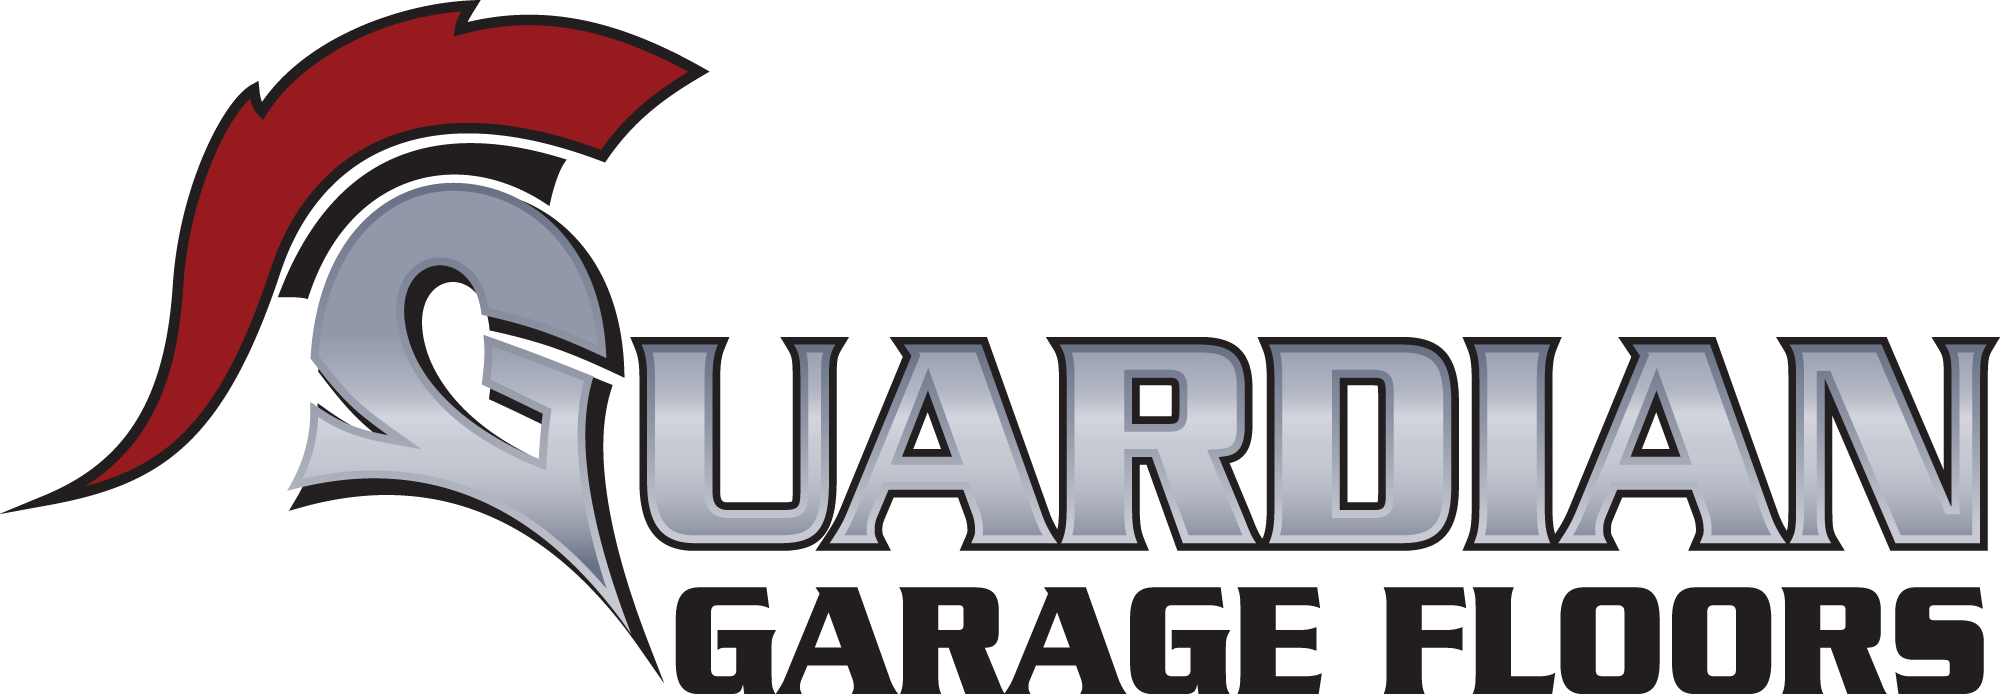 Guardian Garage Floors Logo